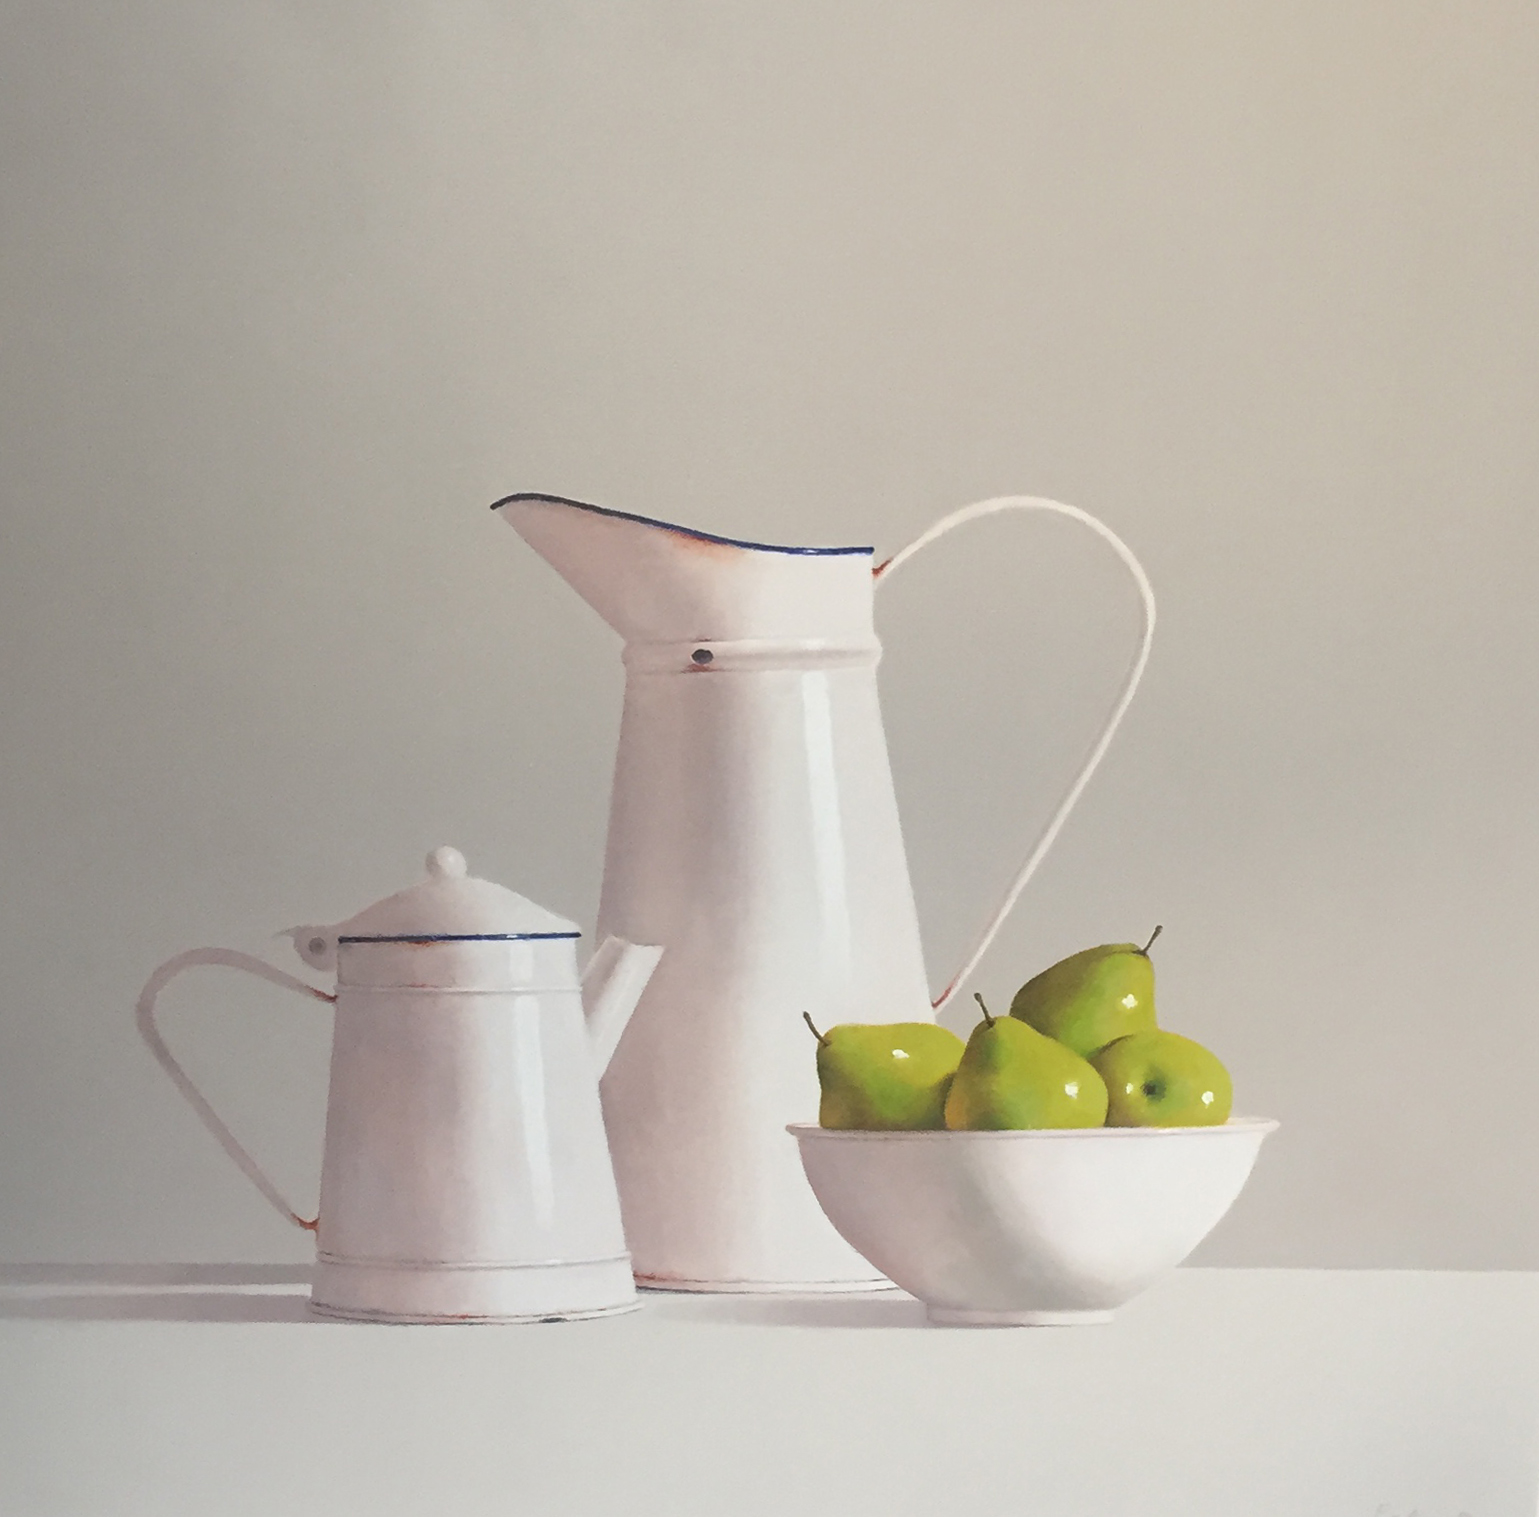 Vintage Enamel ware with Pears by Peter Dee